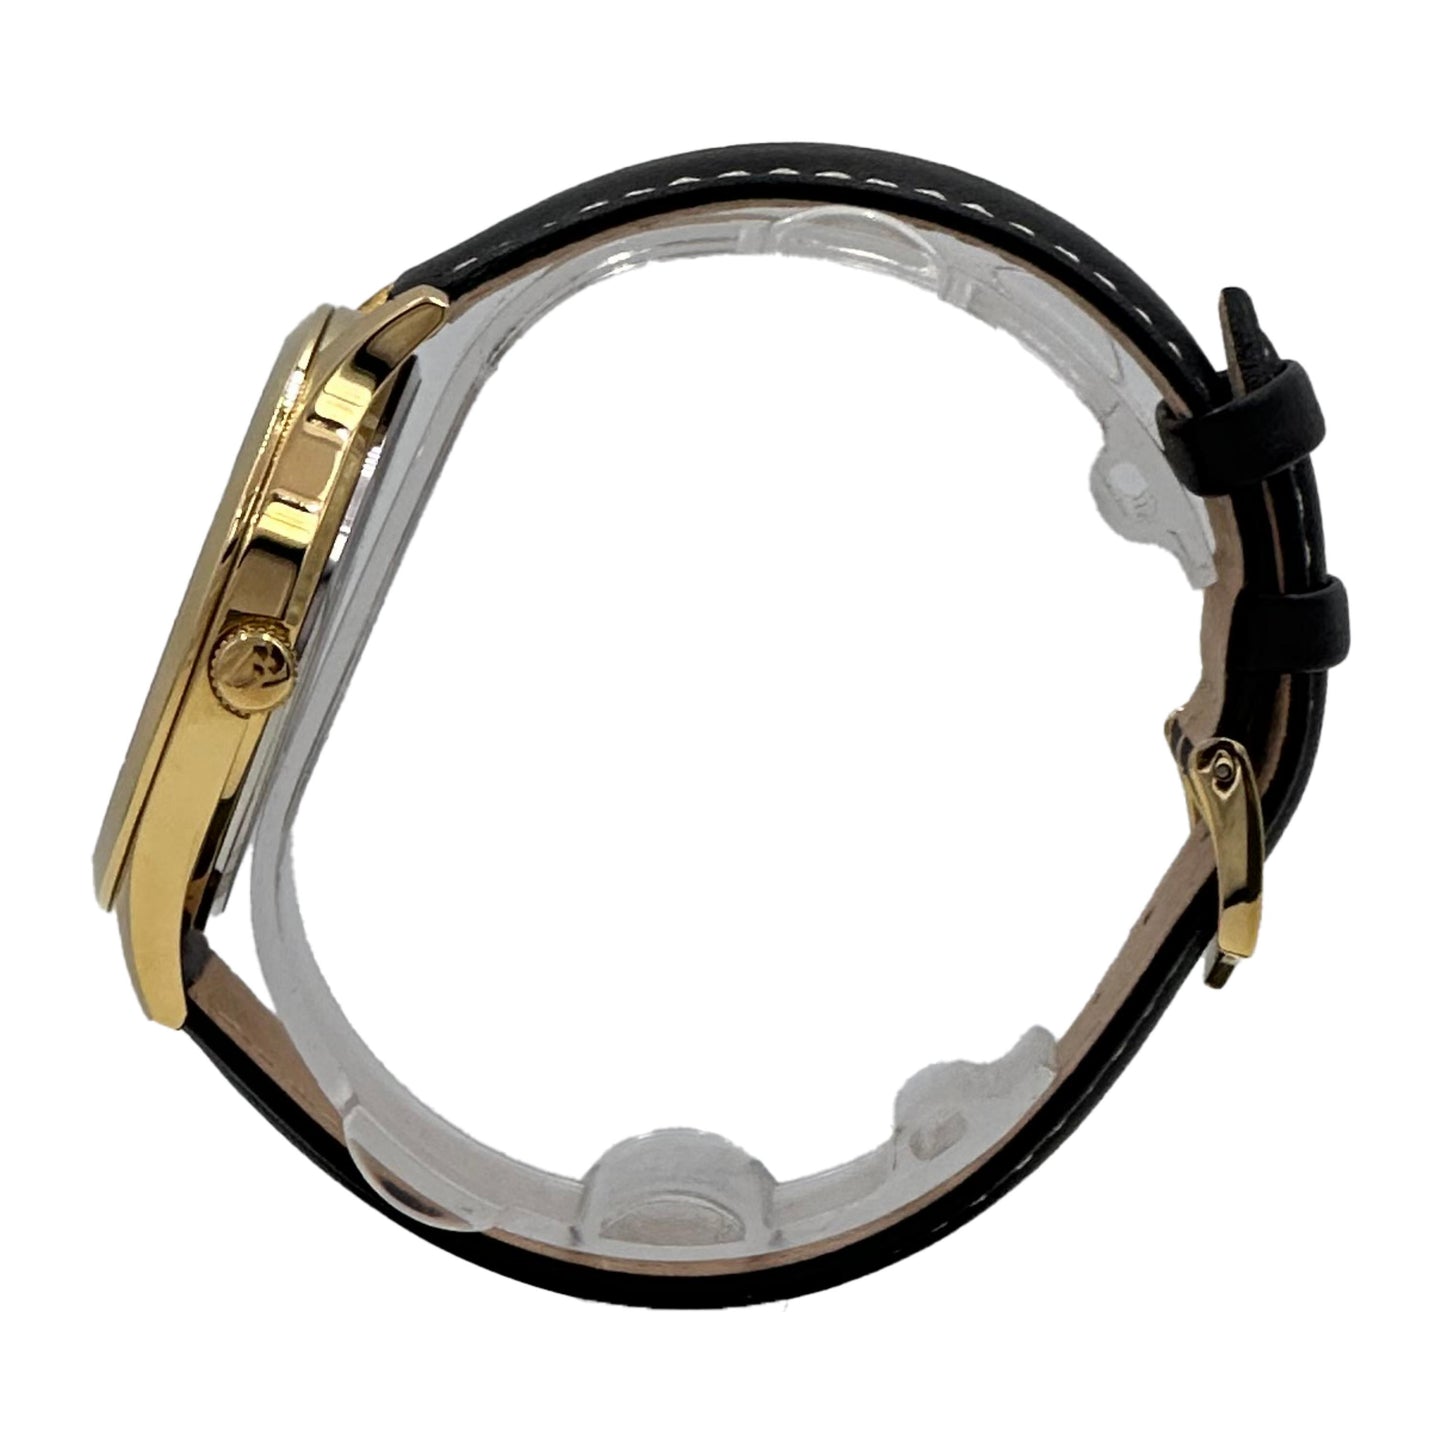 Bulova Men's Gold-Tone Case Black Leather Strap Watch - 971B181 0042429565128